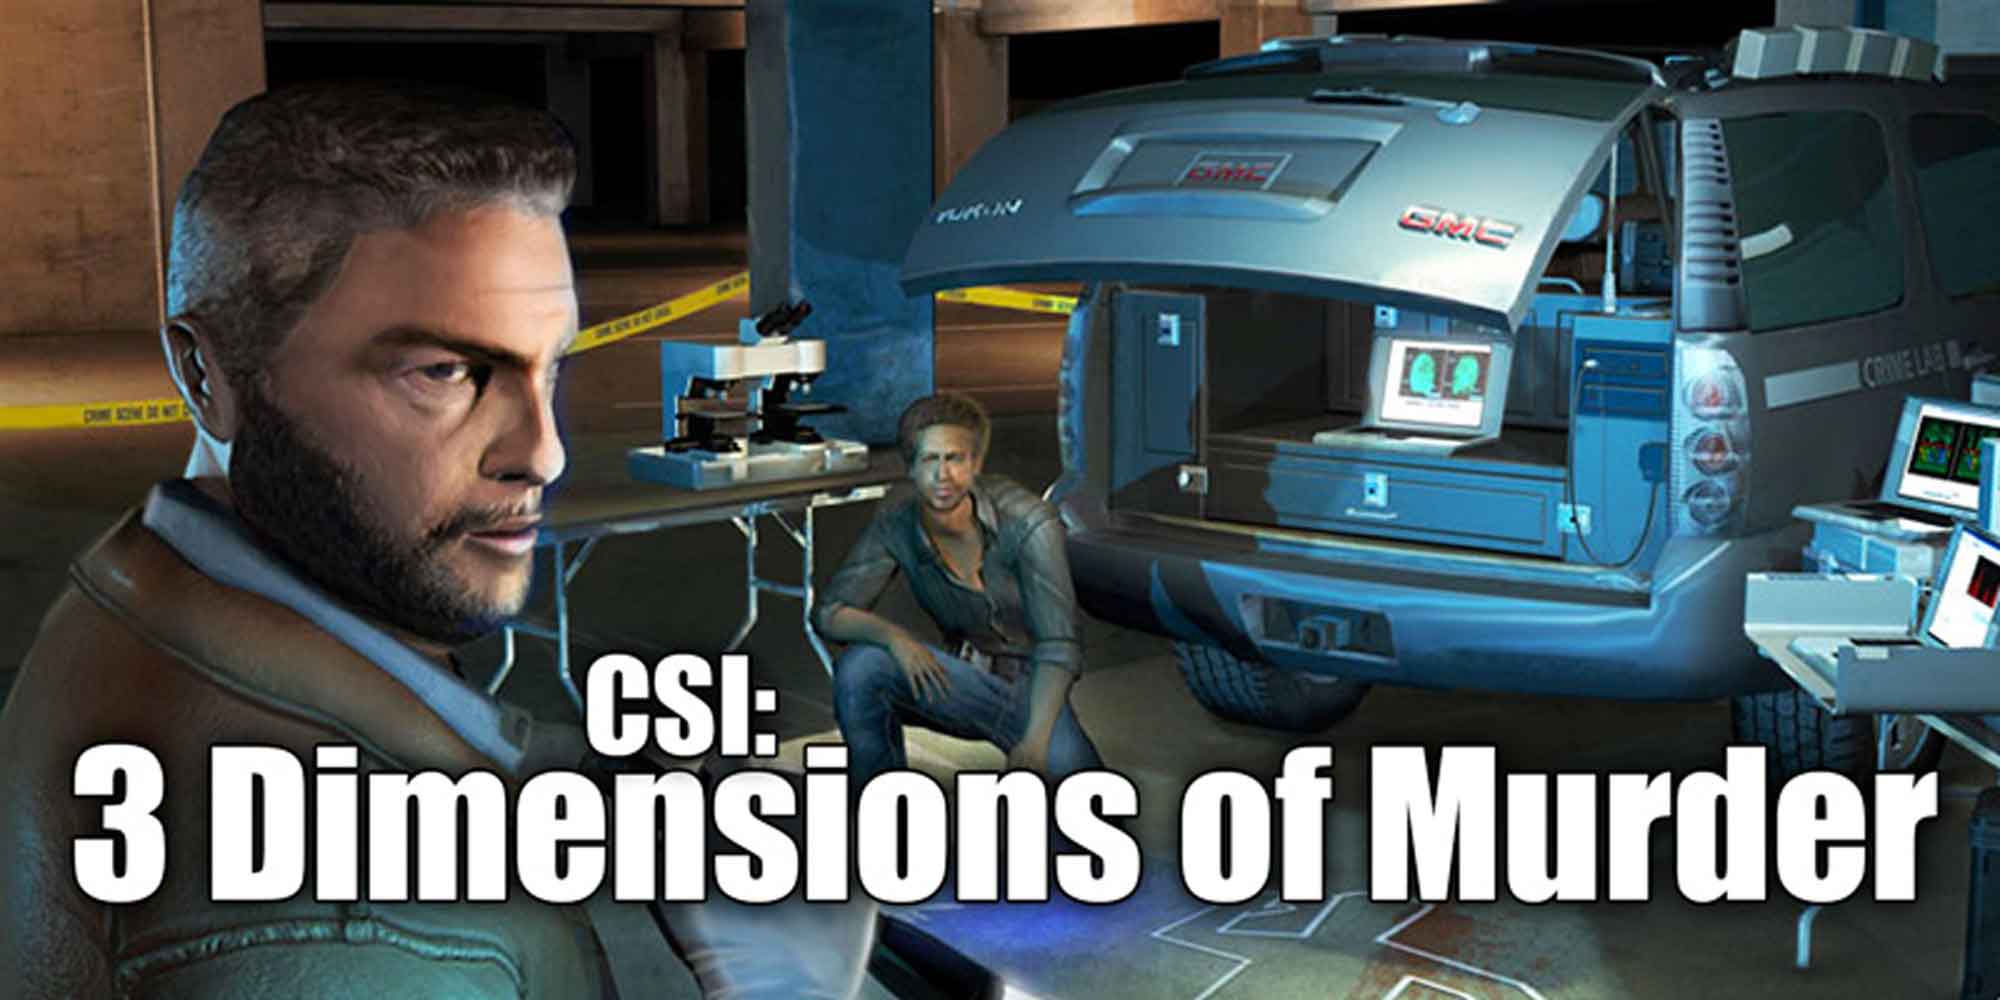 CSI: 3 Dimensions of Murder (Game Review + Walkthrough)